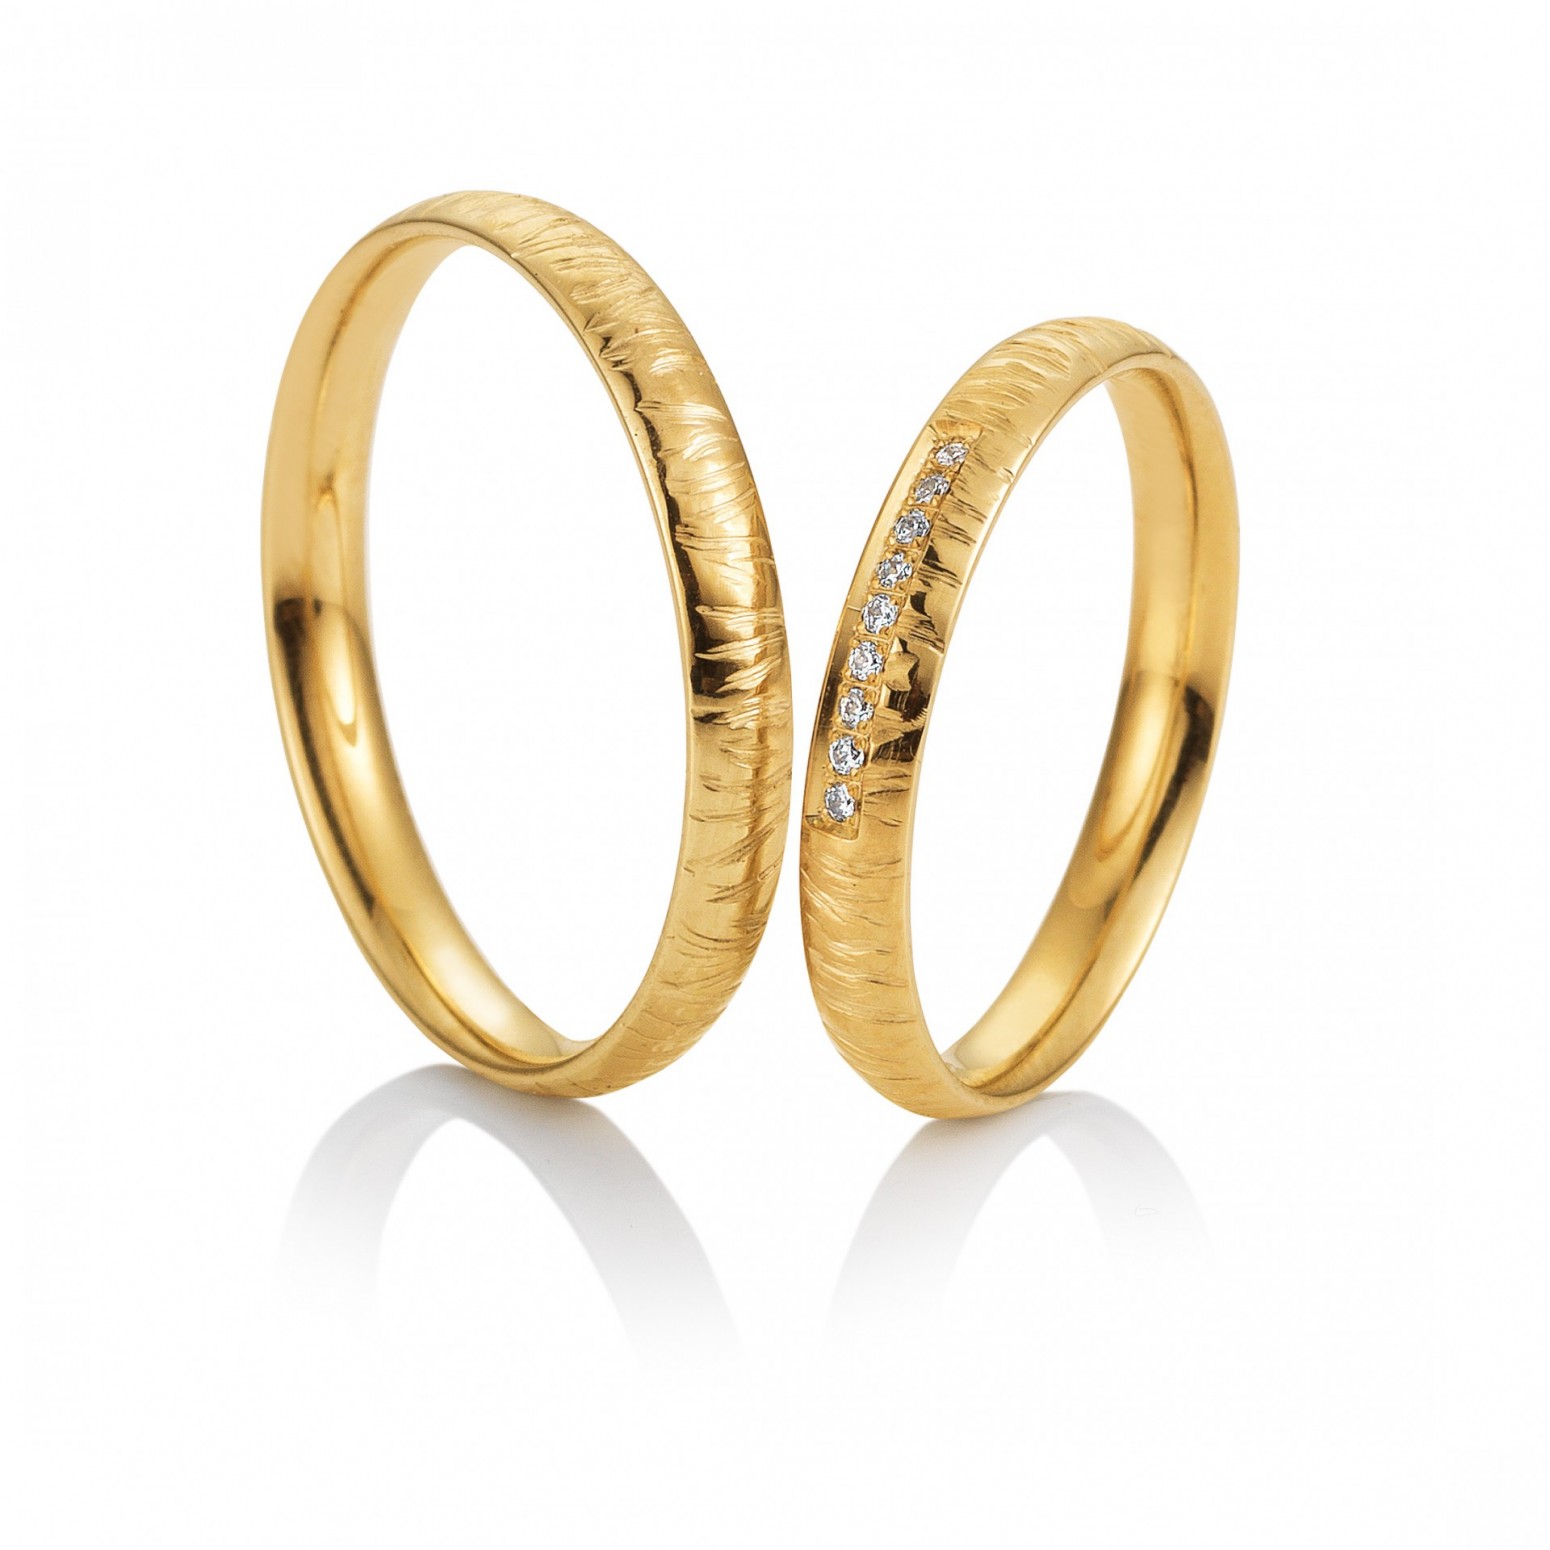 Saint Maurice wedding rings in yellow gold, K9, pair da3595 WEDDING RINGS Κοσμηματα - chrilia.gr